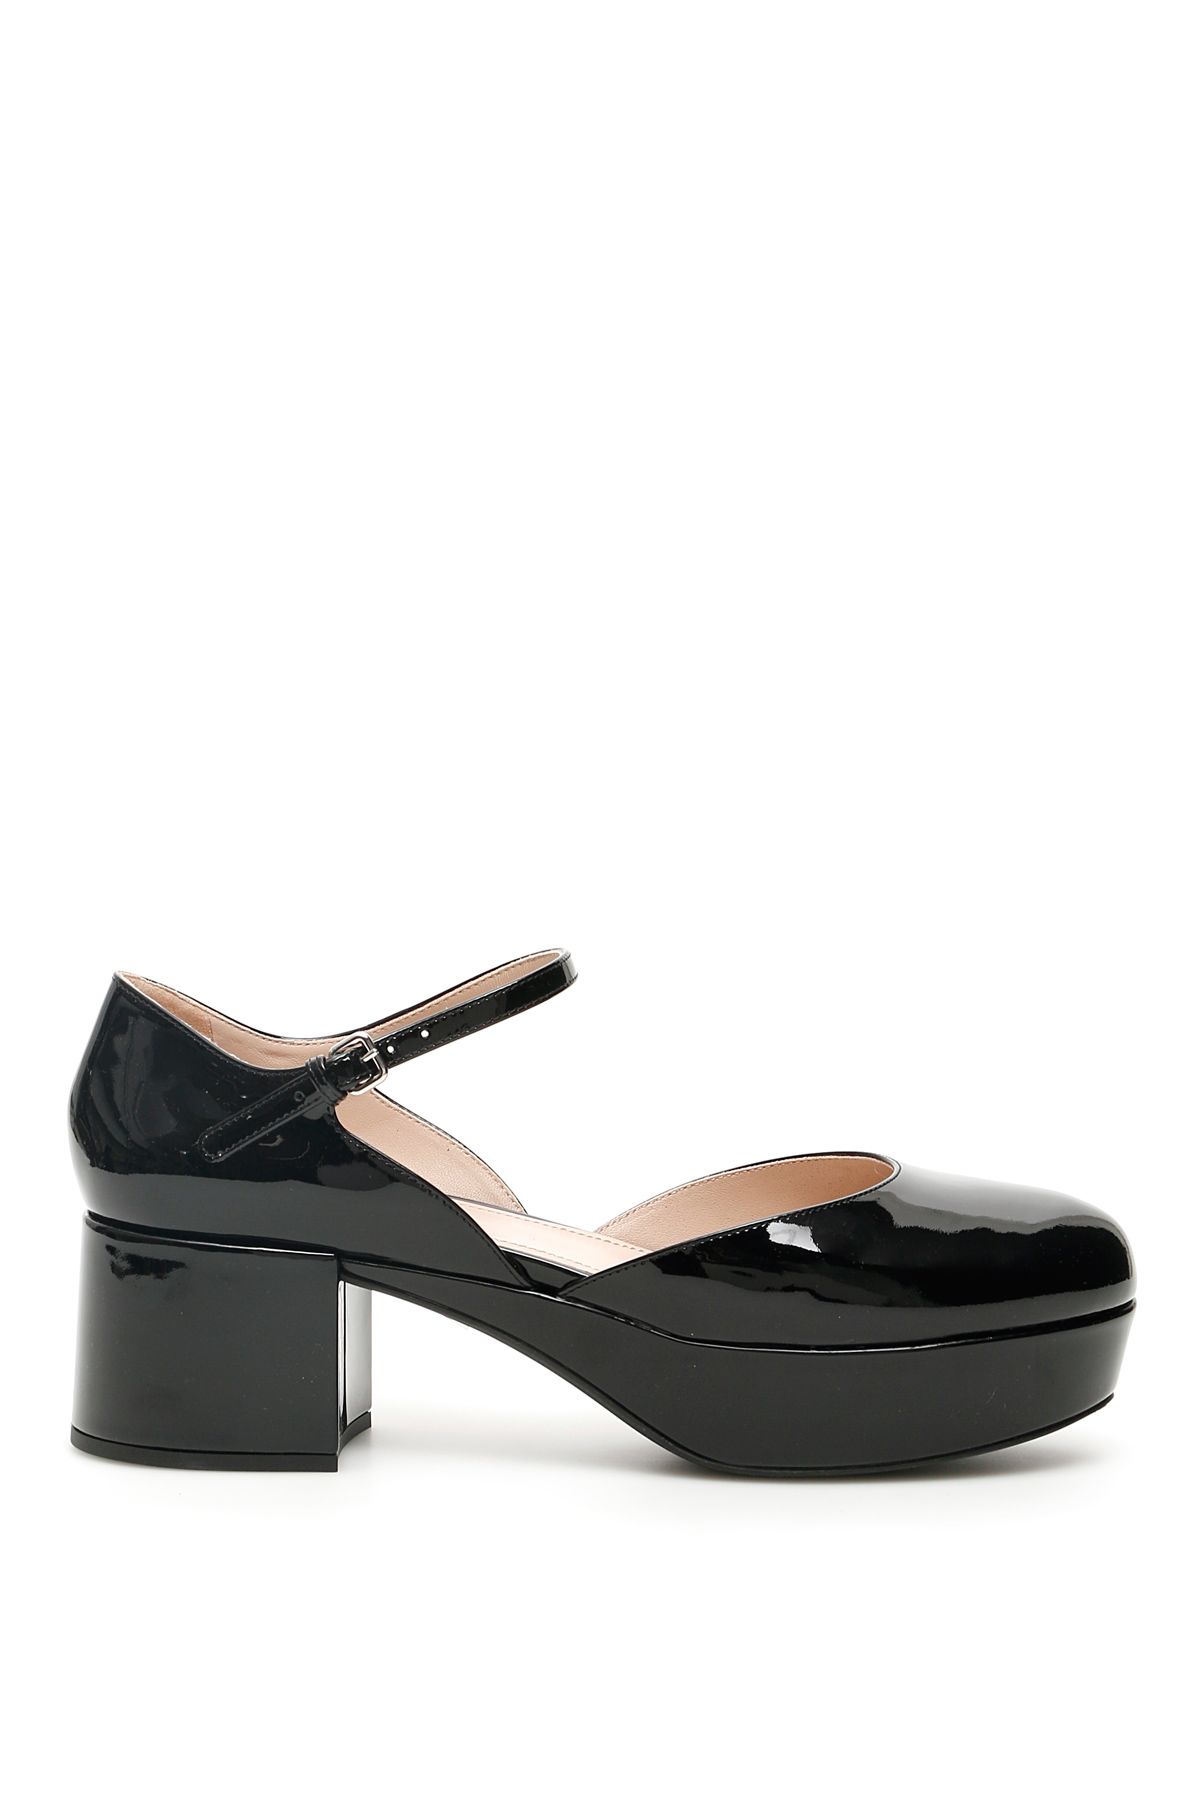 Miu Miu High-heeled shoes | italist 